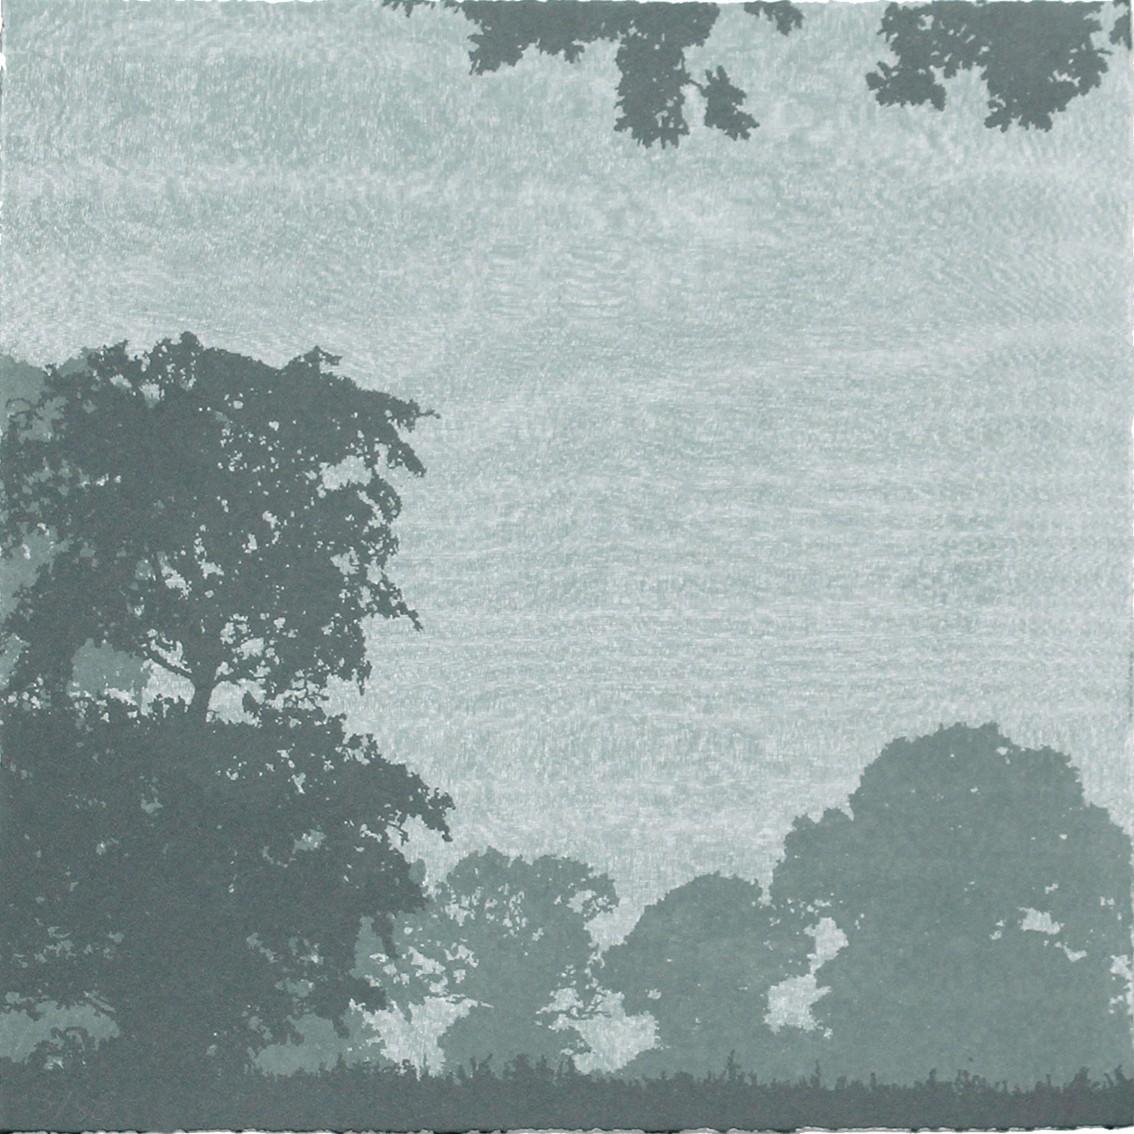 Anna Harley, Oaks Mini, Limited Edition Silkscreen Print, Affordable Art